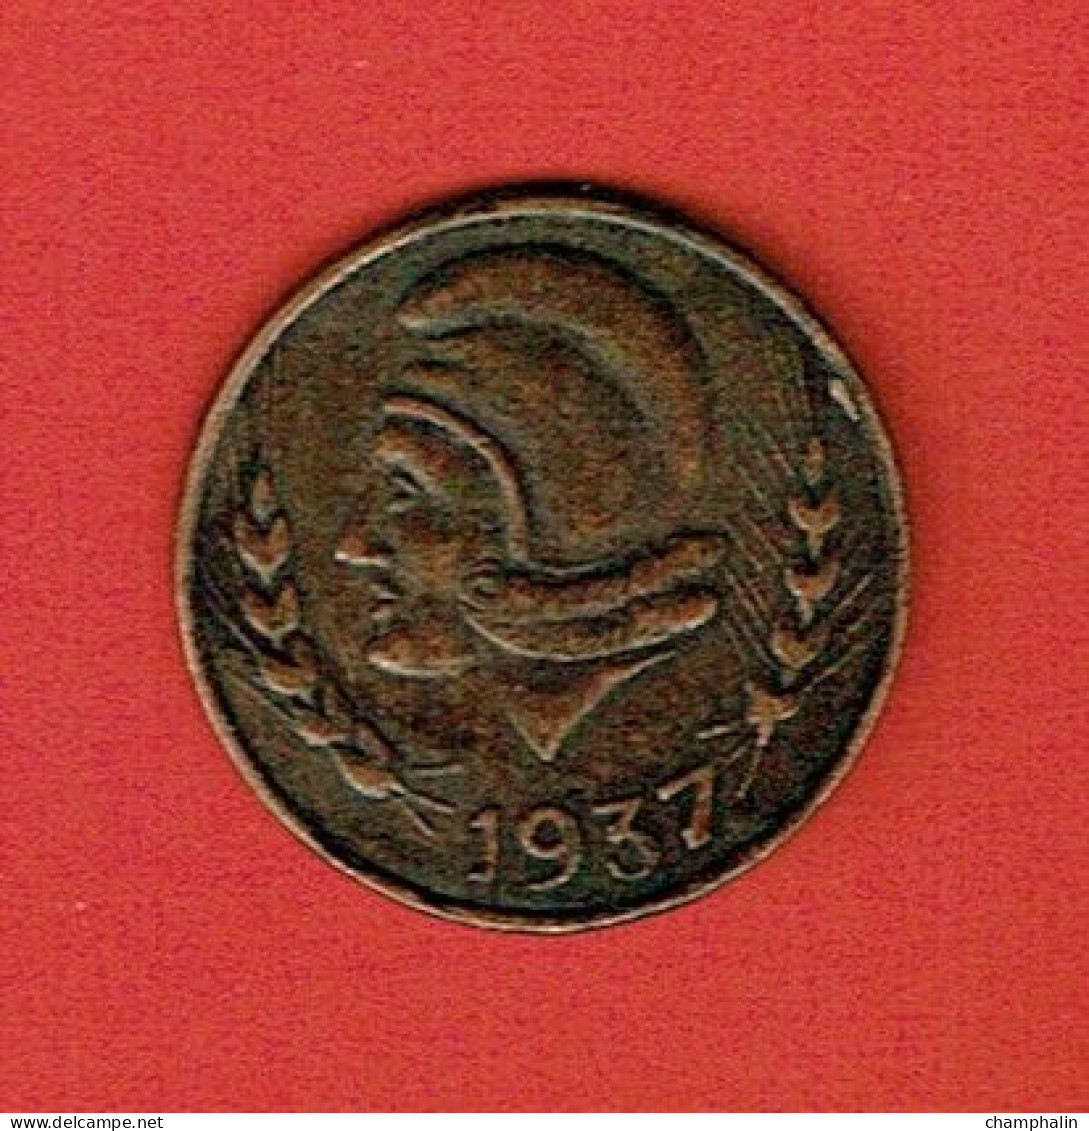 Espagne - Reproduction Monnaie - 25 Centimos 1937 - Consejo Municipal Ibi (Alicante) - Guerre Civile - Republikanische Zone